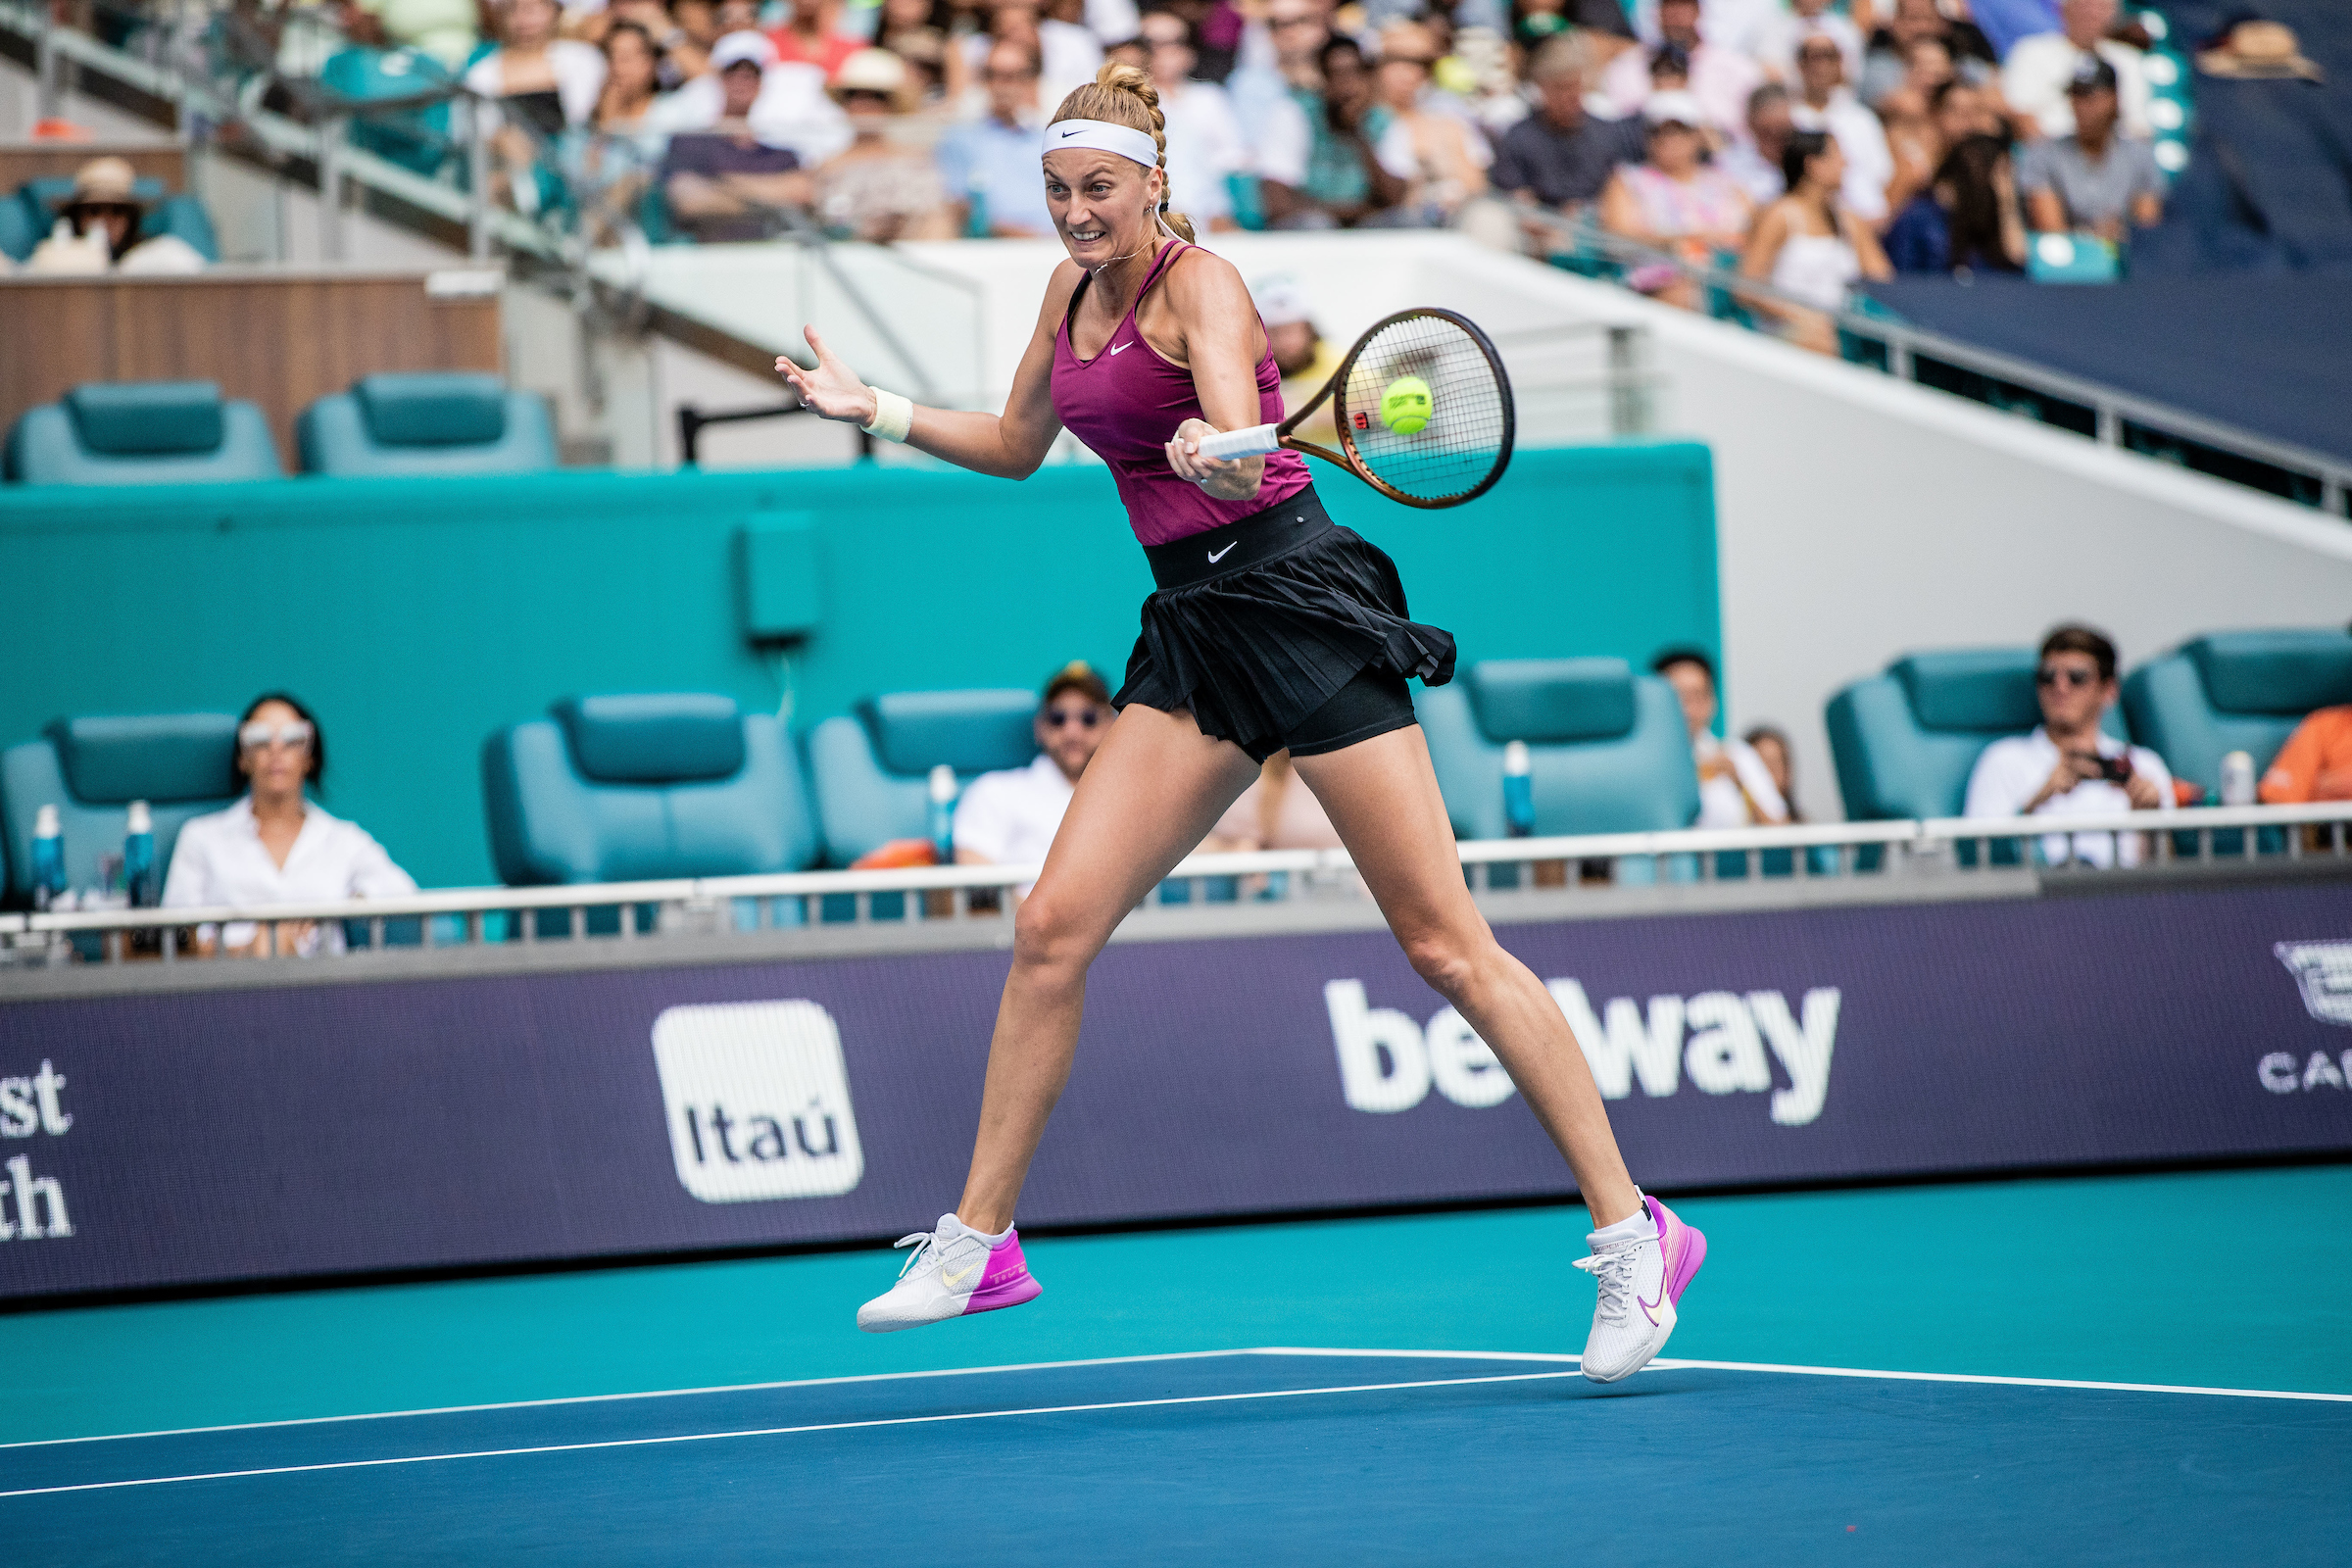 2023 Miami Open Women's Singles Champion Petra Kvitova hitting a forehand